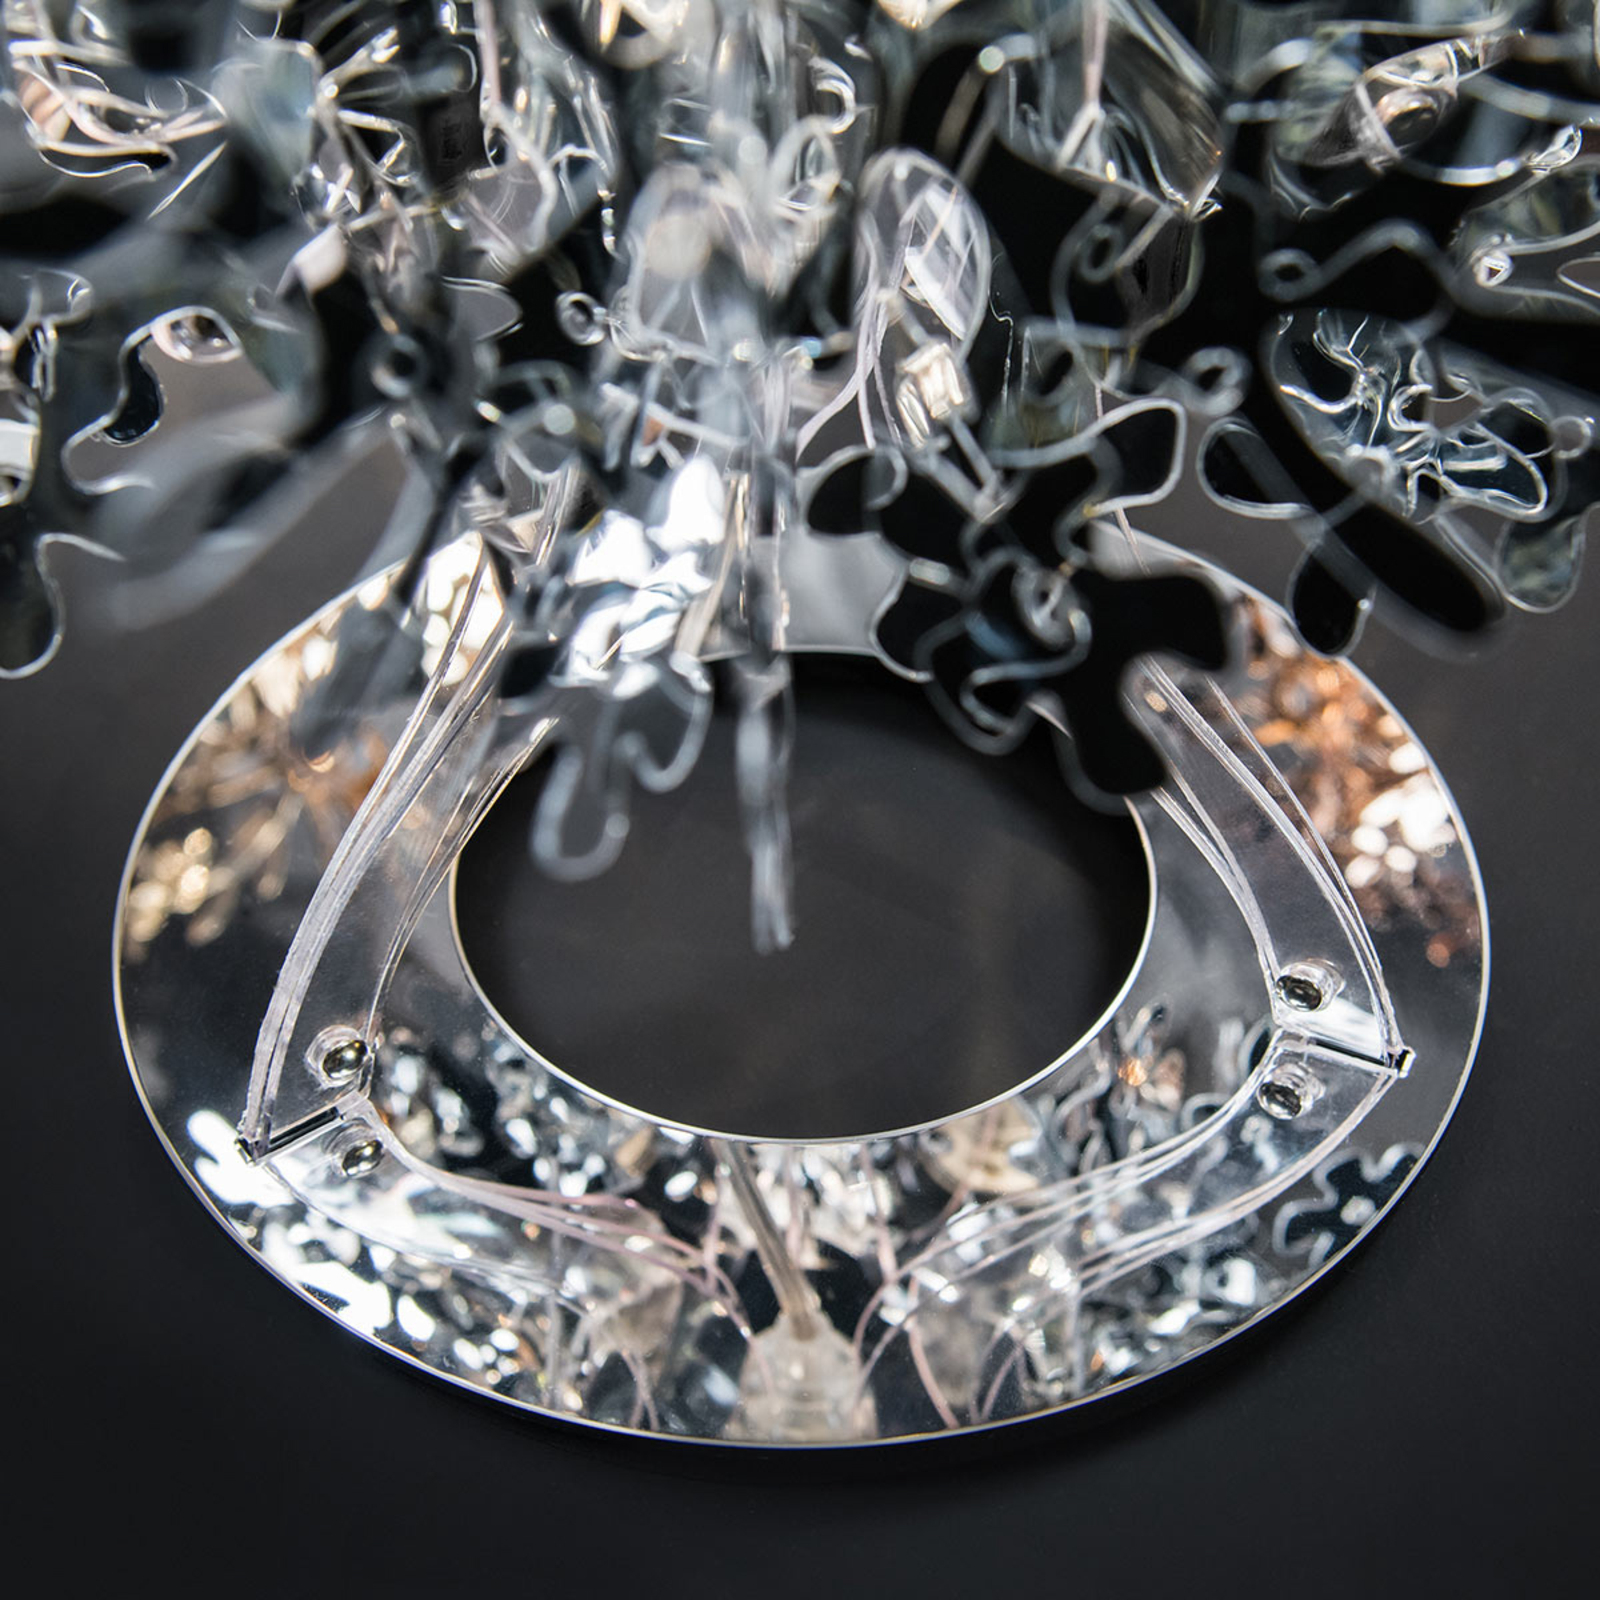 Slamp Fiorellina - silver table lamp